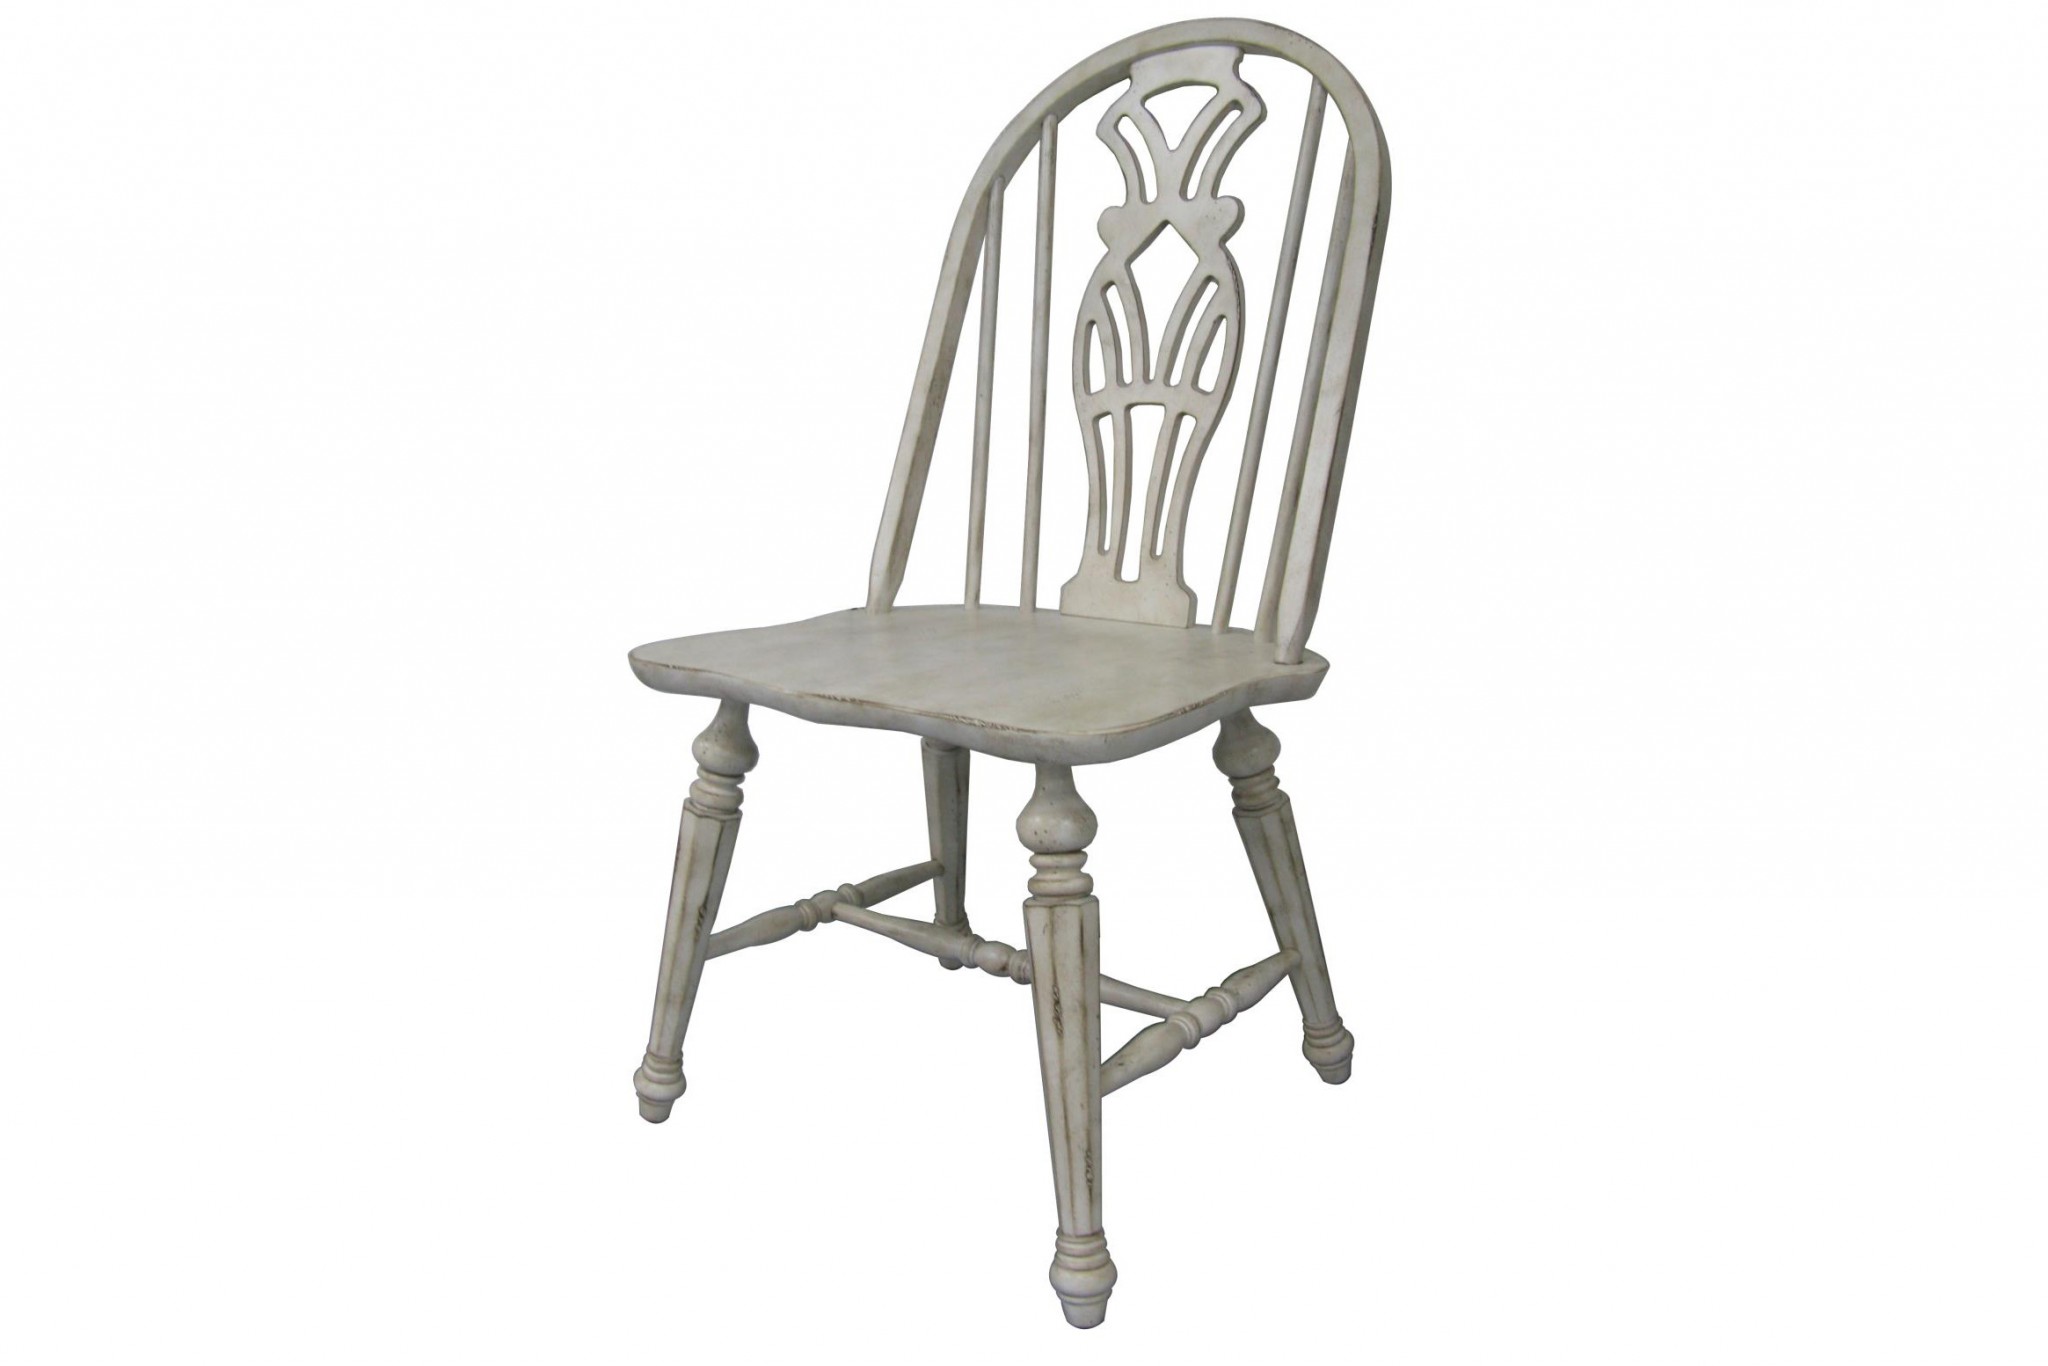 22" X 22" X 41" Vintage Estates Hardwood Dining Height Side Chair